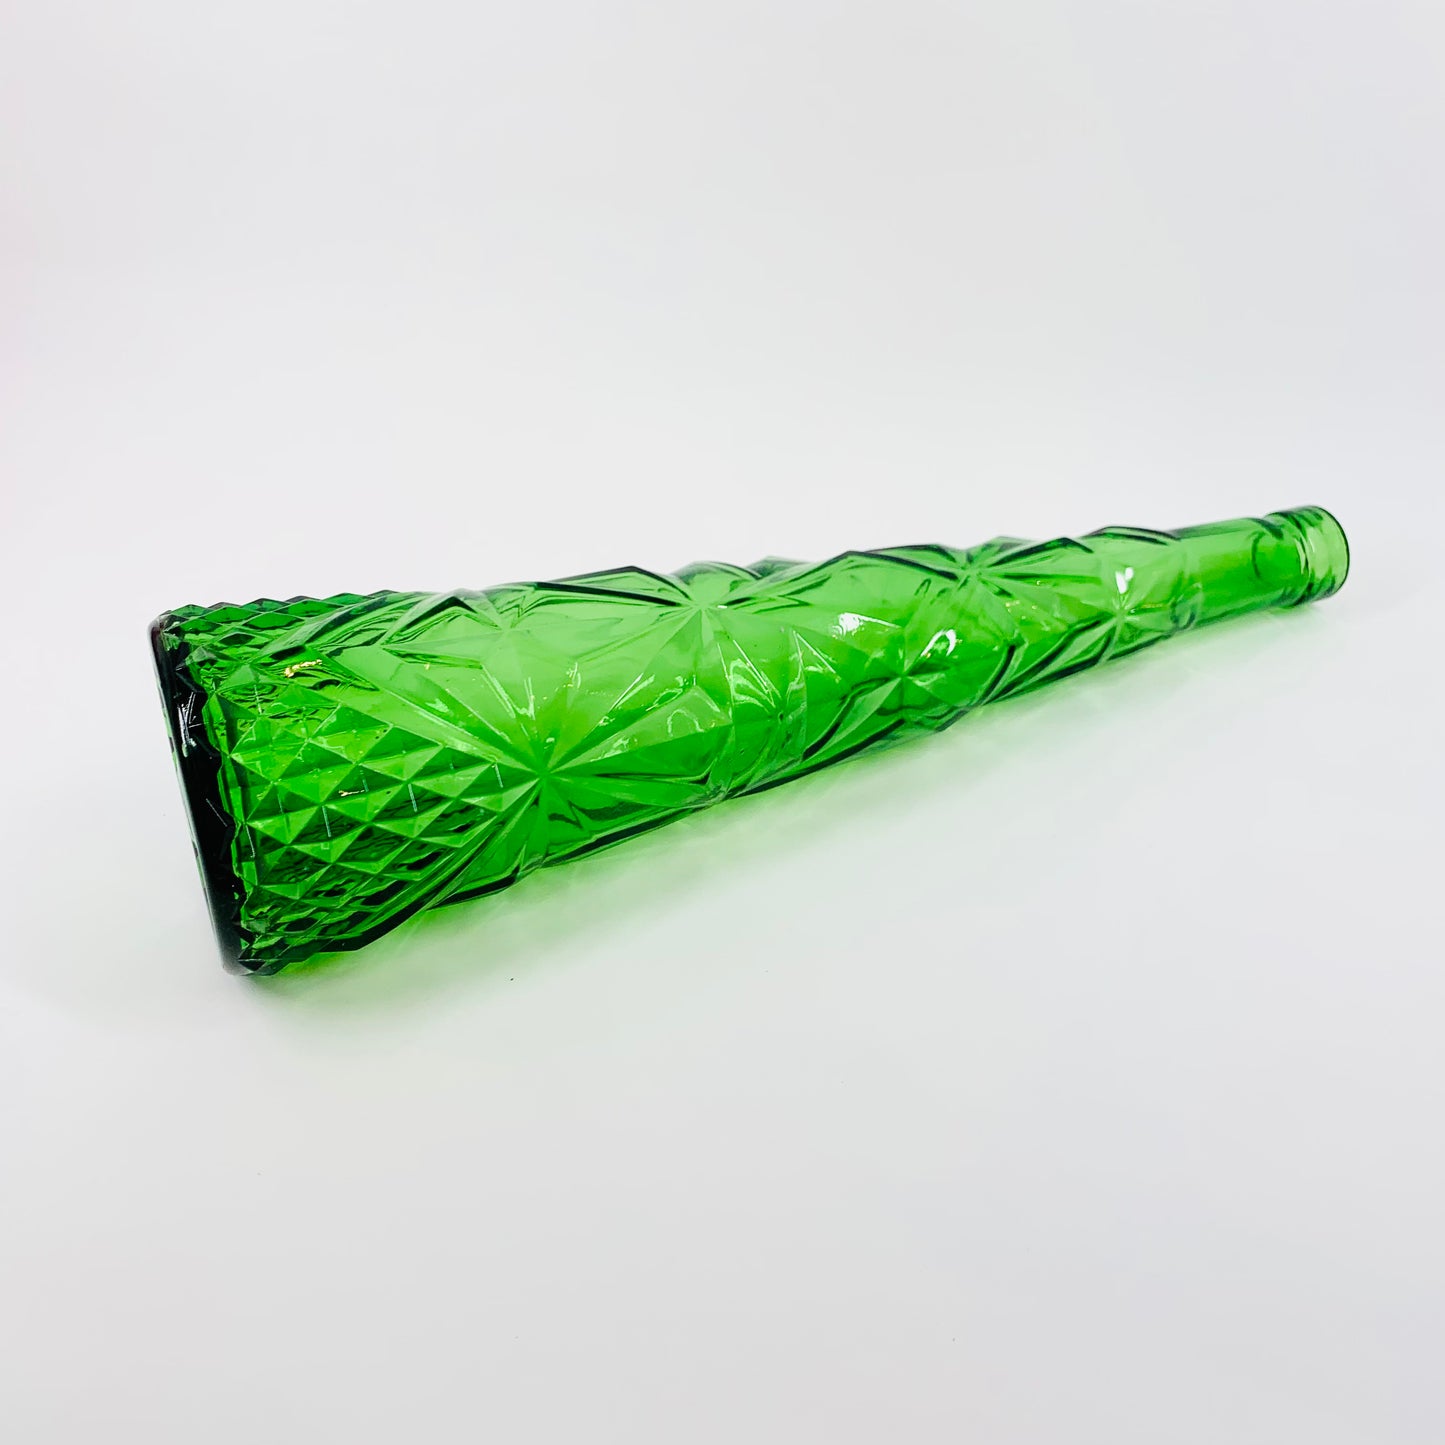 Rare Midcentury green diamond pattern glass decanter/genie bottle